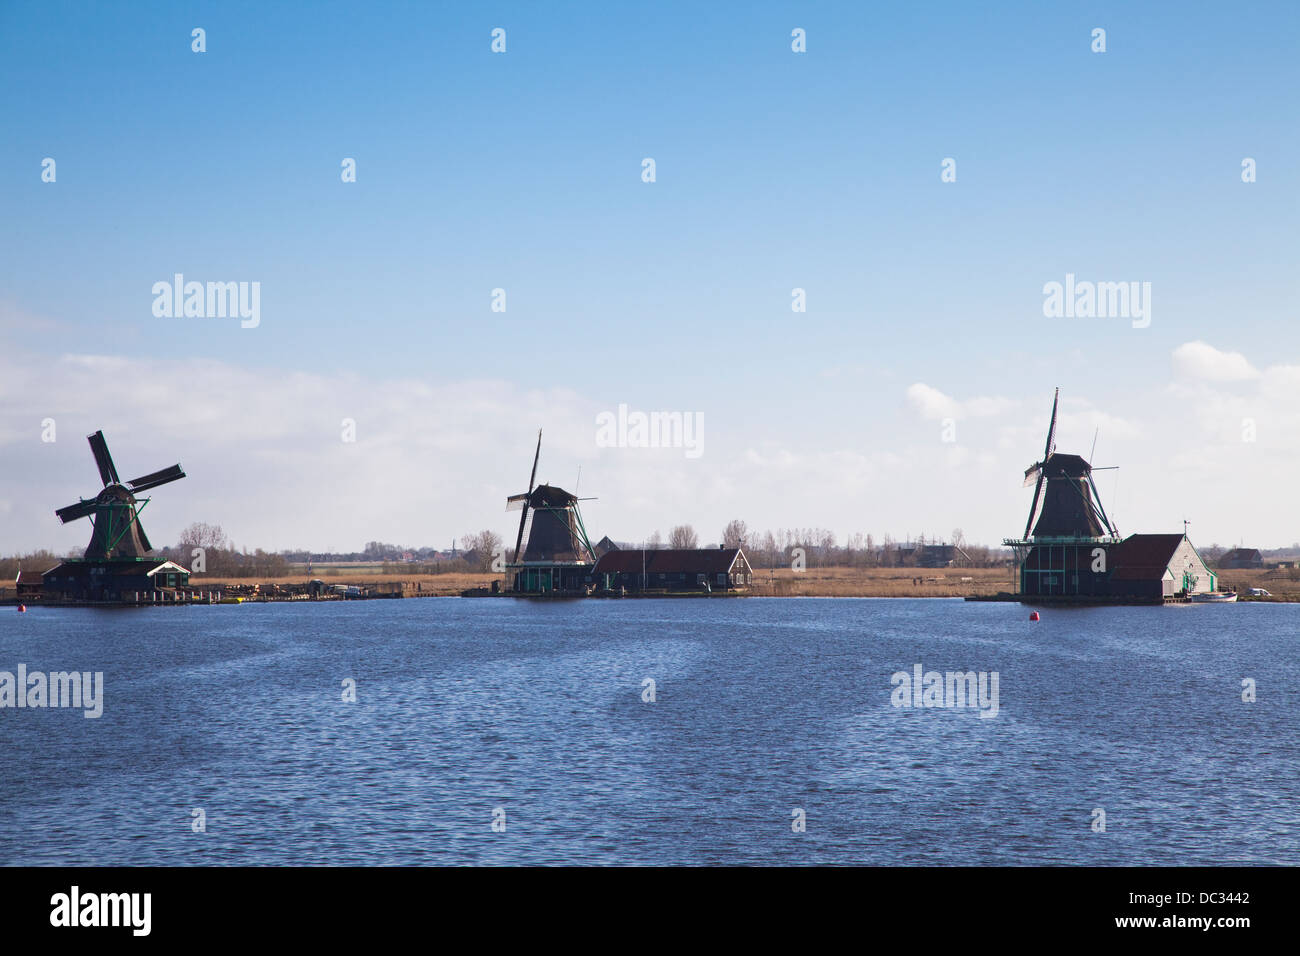 Europe,Netherlands,North Holland, Zaandam,Zaanse Schans, Stock Photo